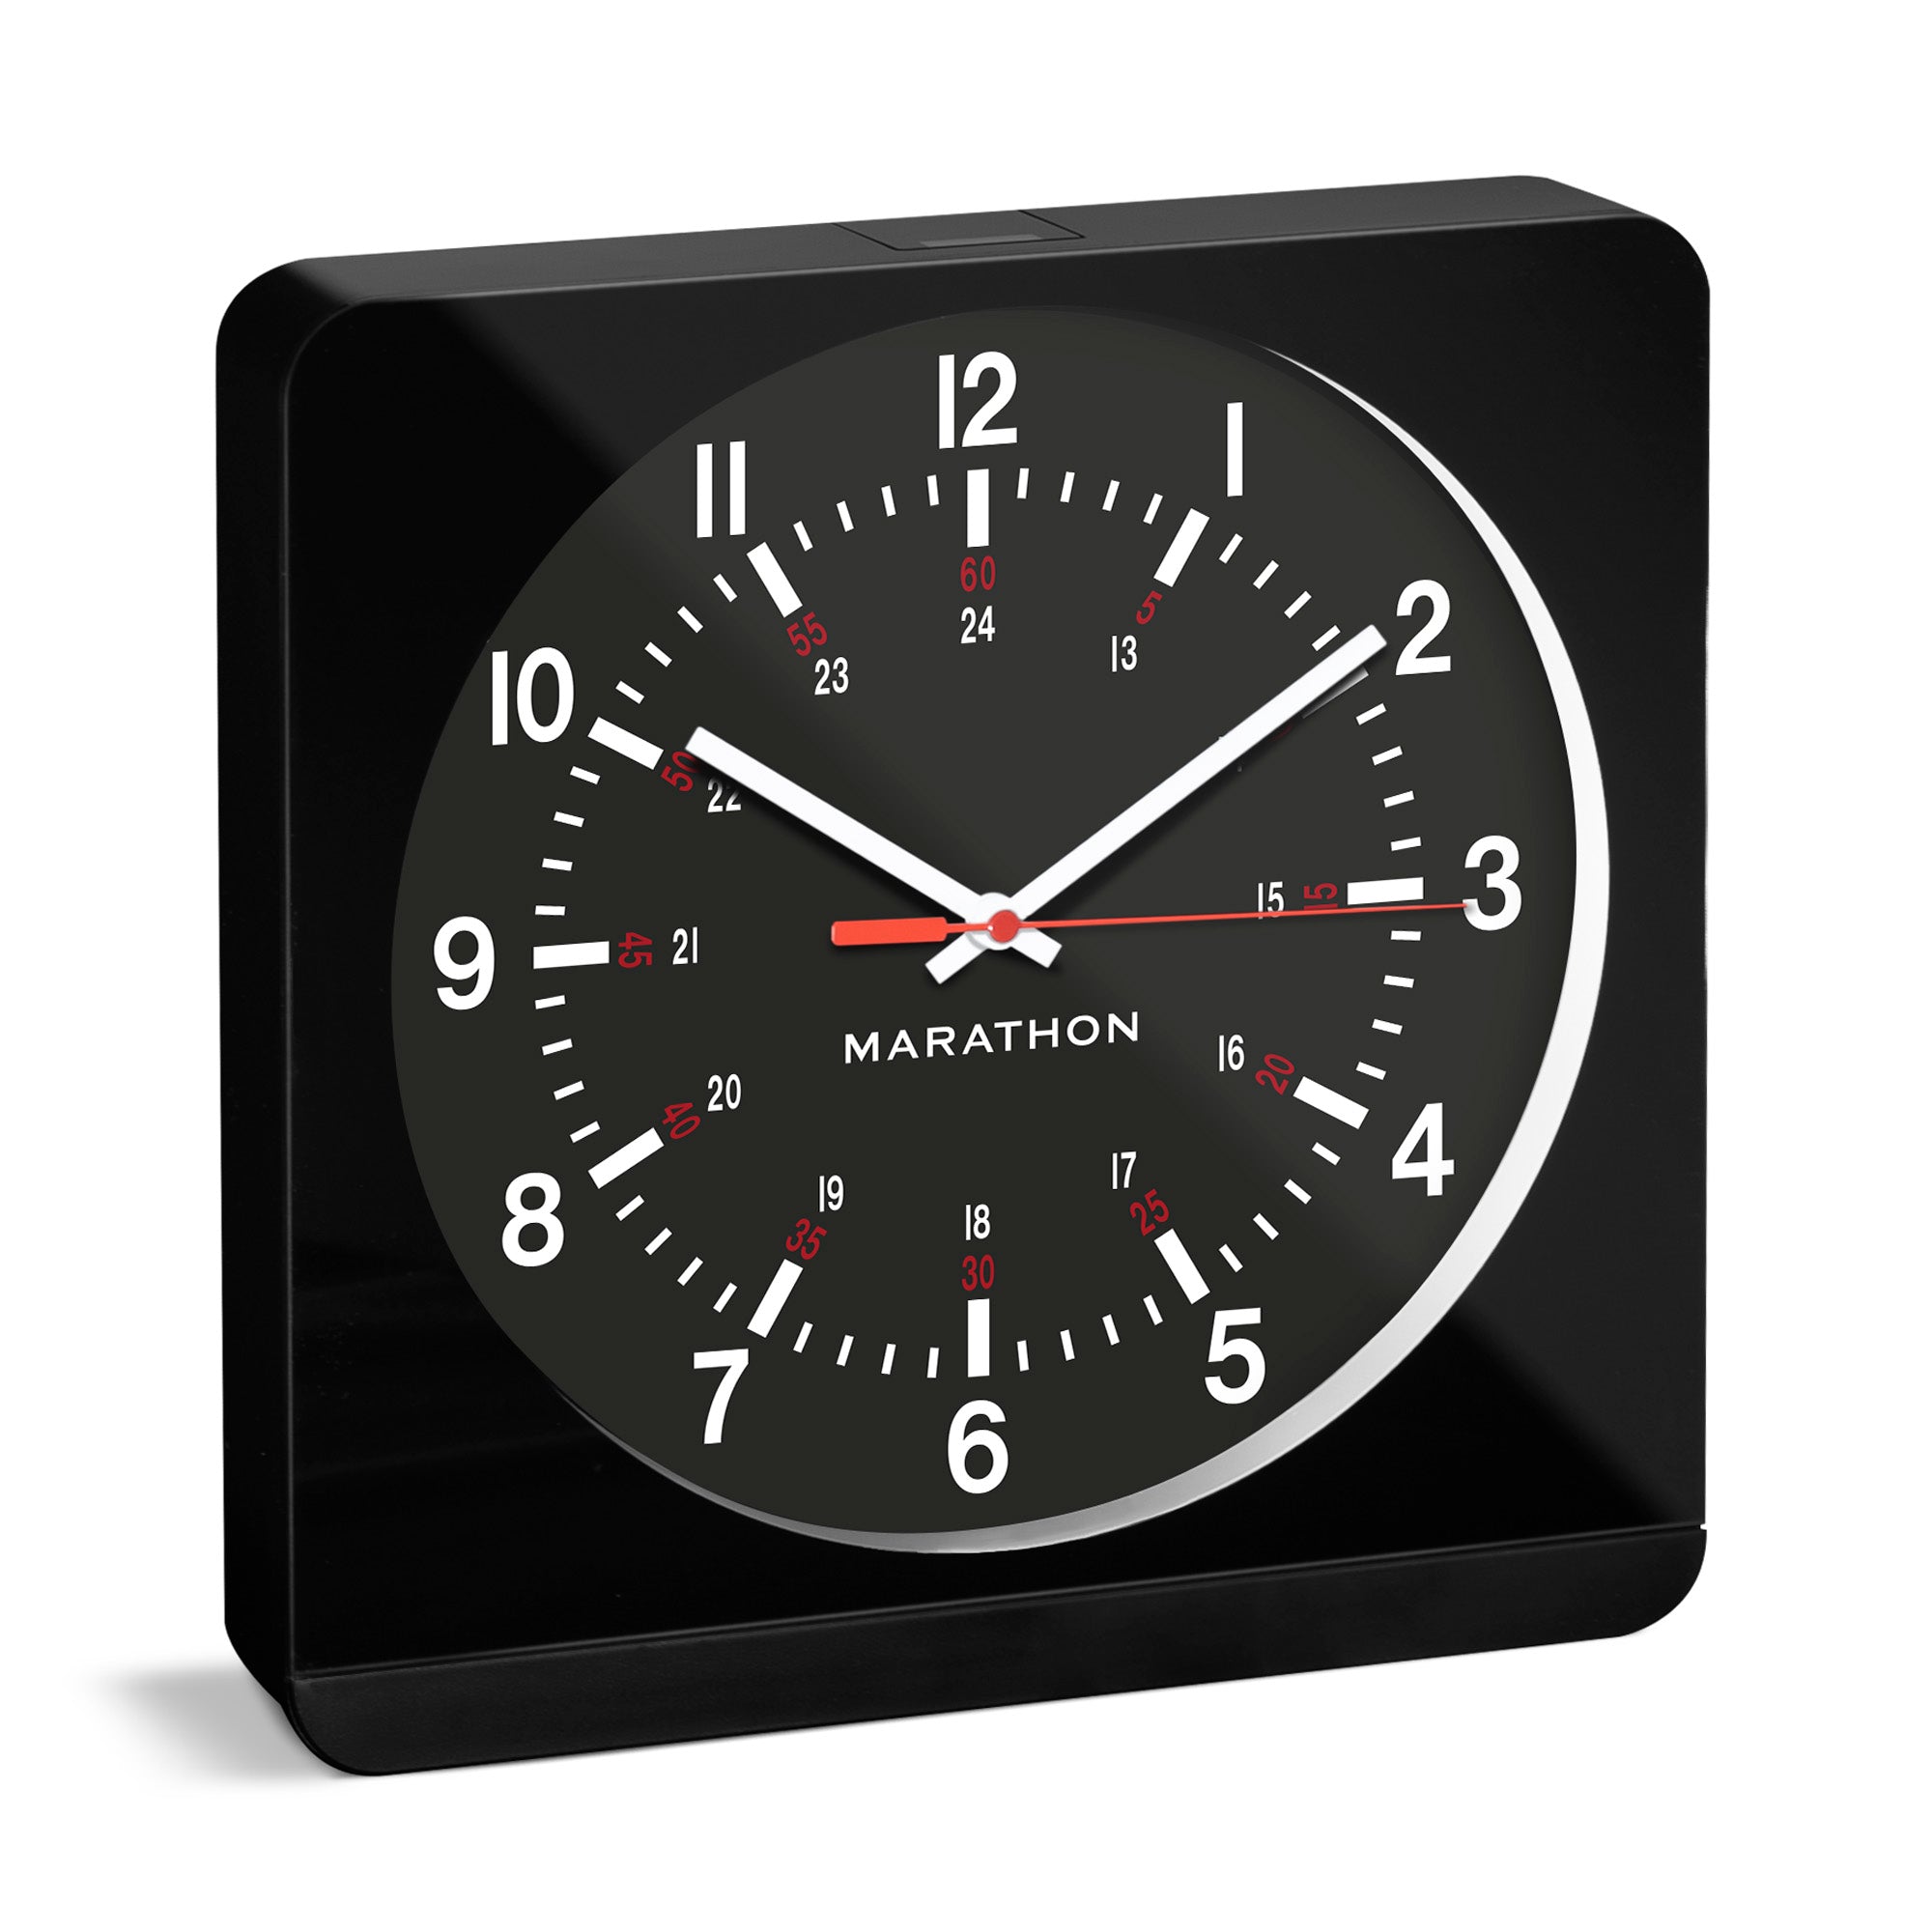 Jumbo 12 Inch Analog Wall Clock with Auto Backlight